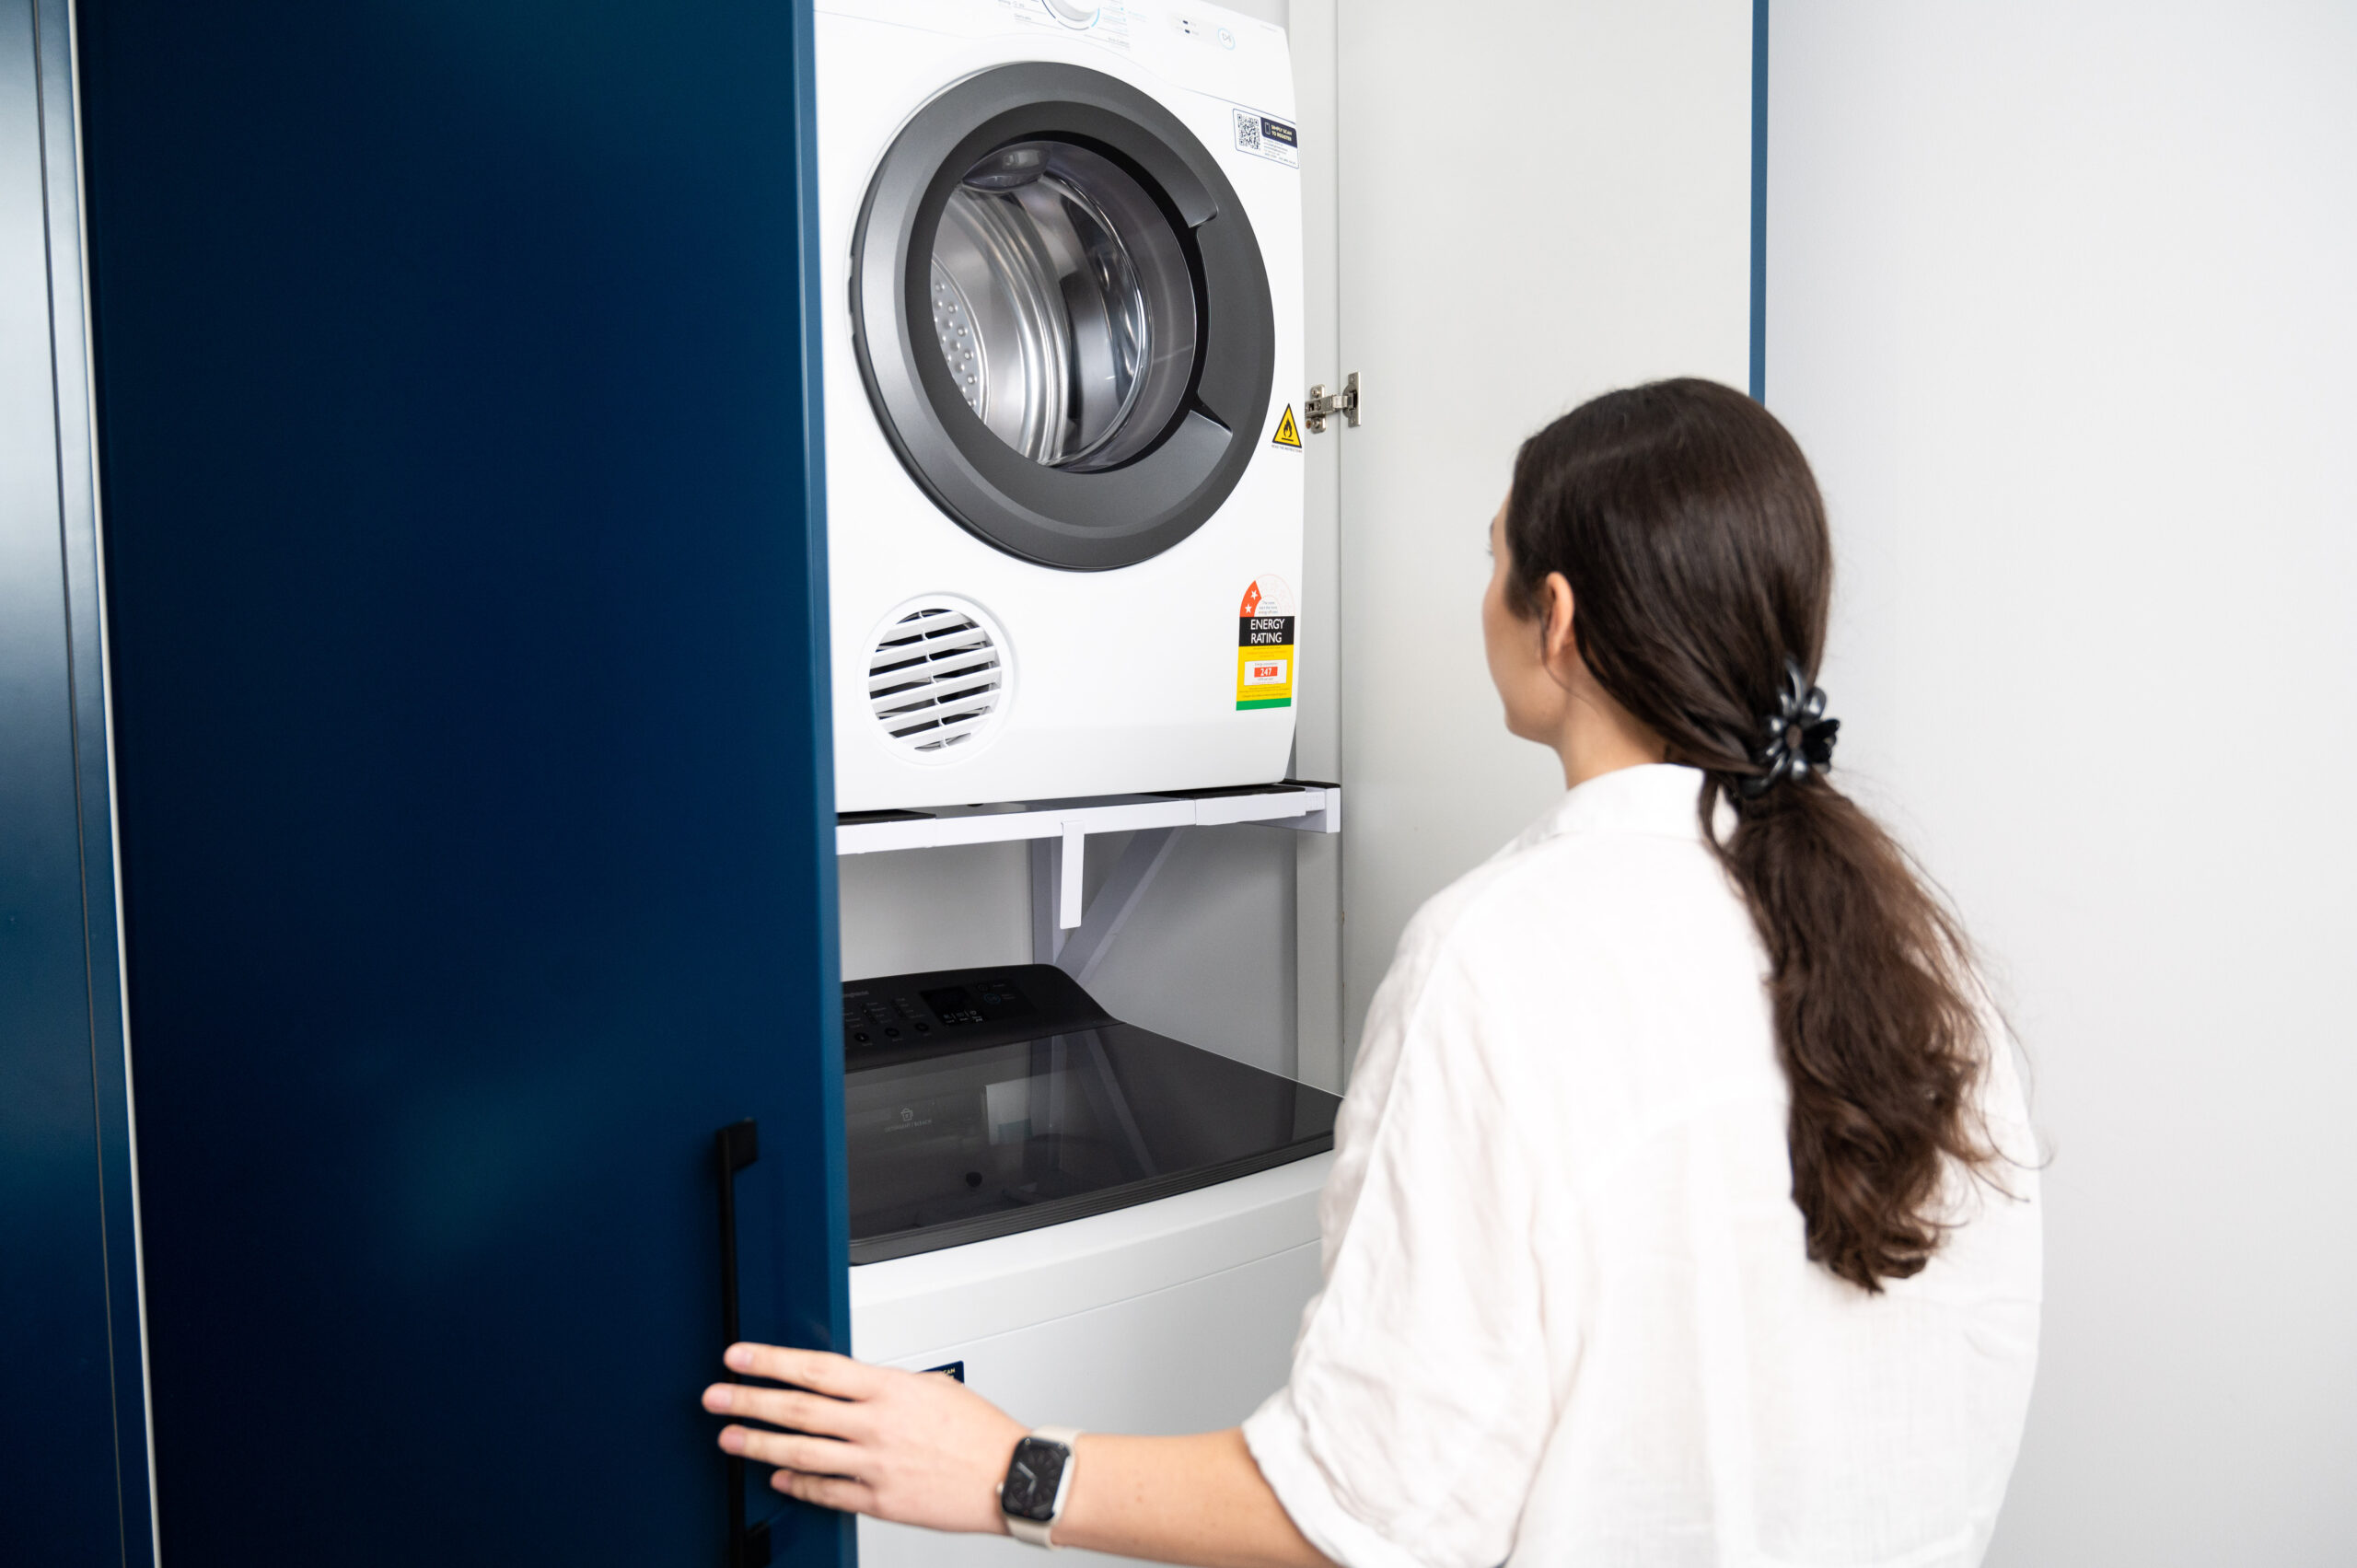 Adjustable Freestanding Dryer Stand - Dryer Stands UK